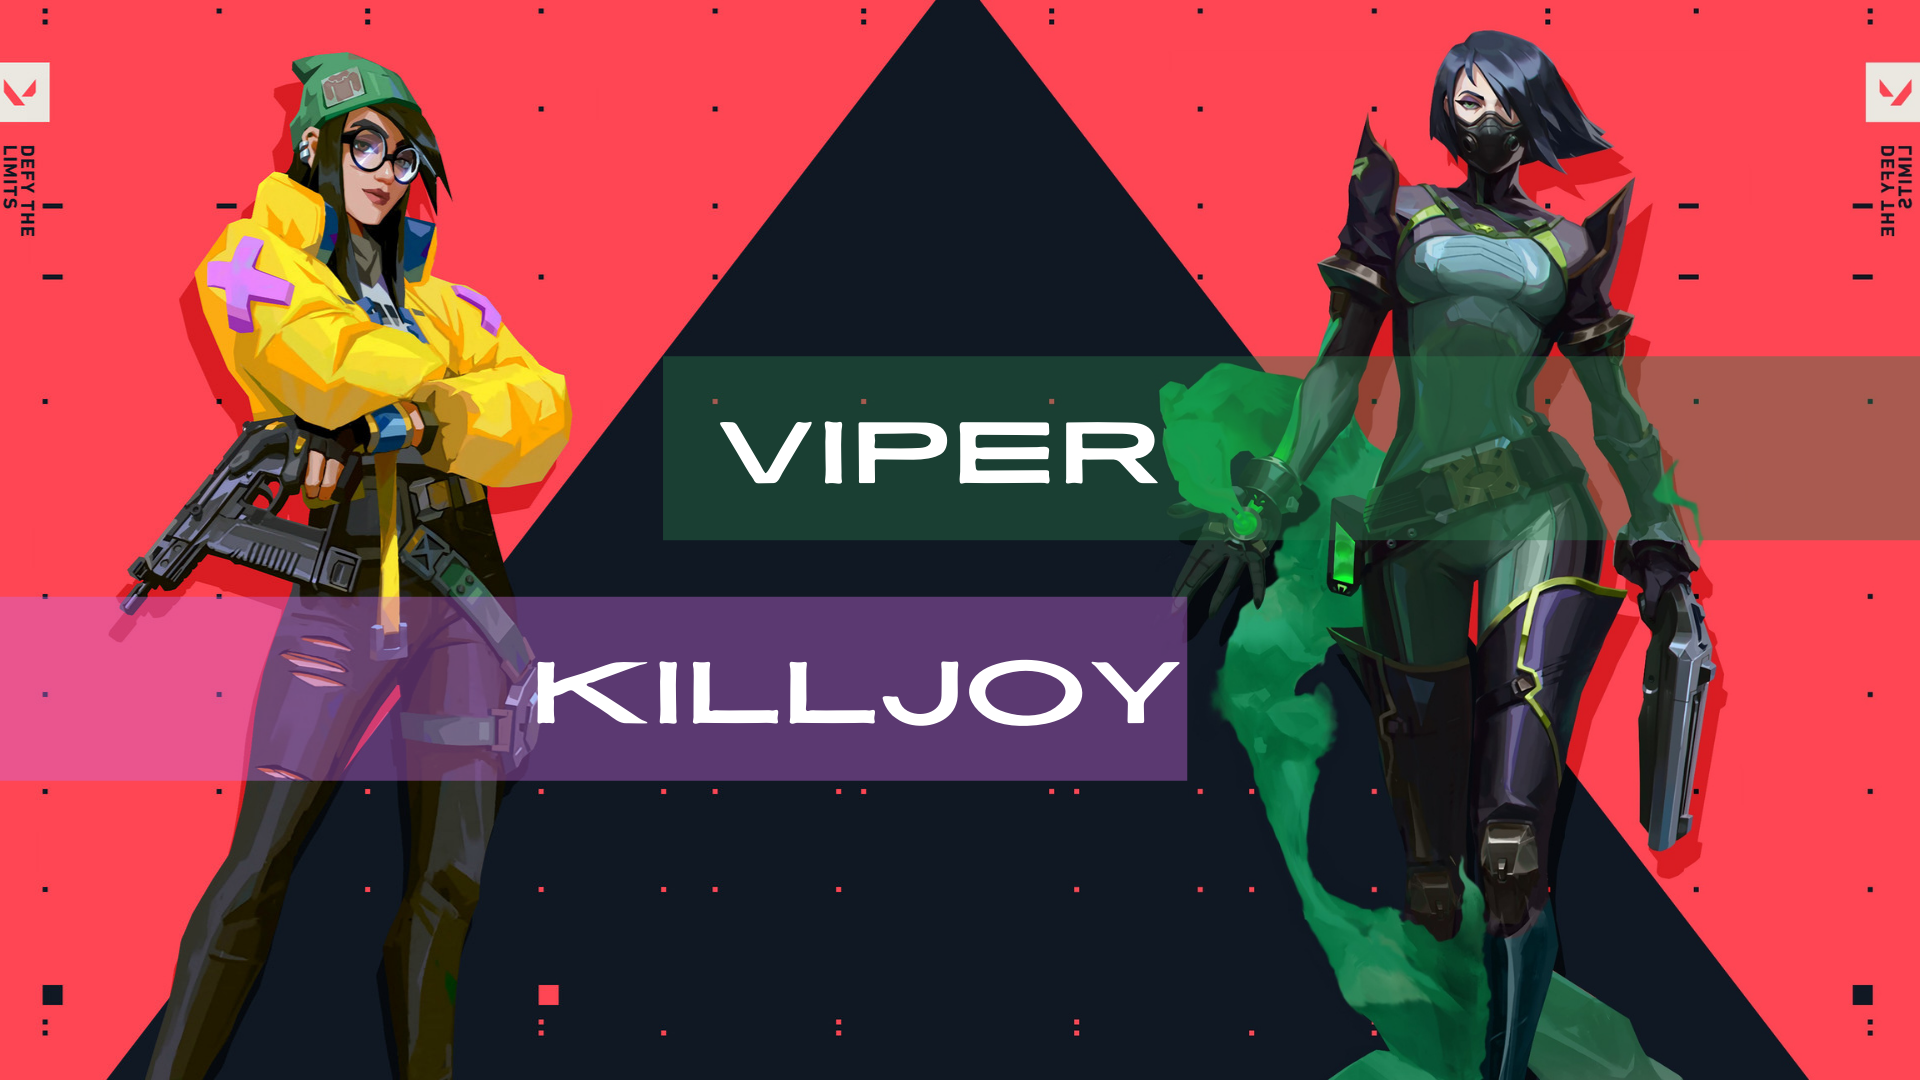 General 1920x1080 Viper (Valorant) Killjoy (Valorant) Valorant video game characters video games